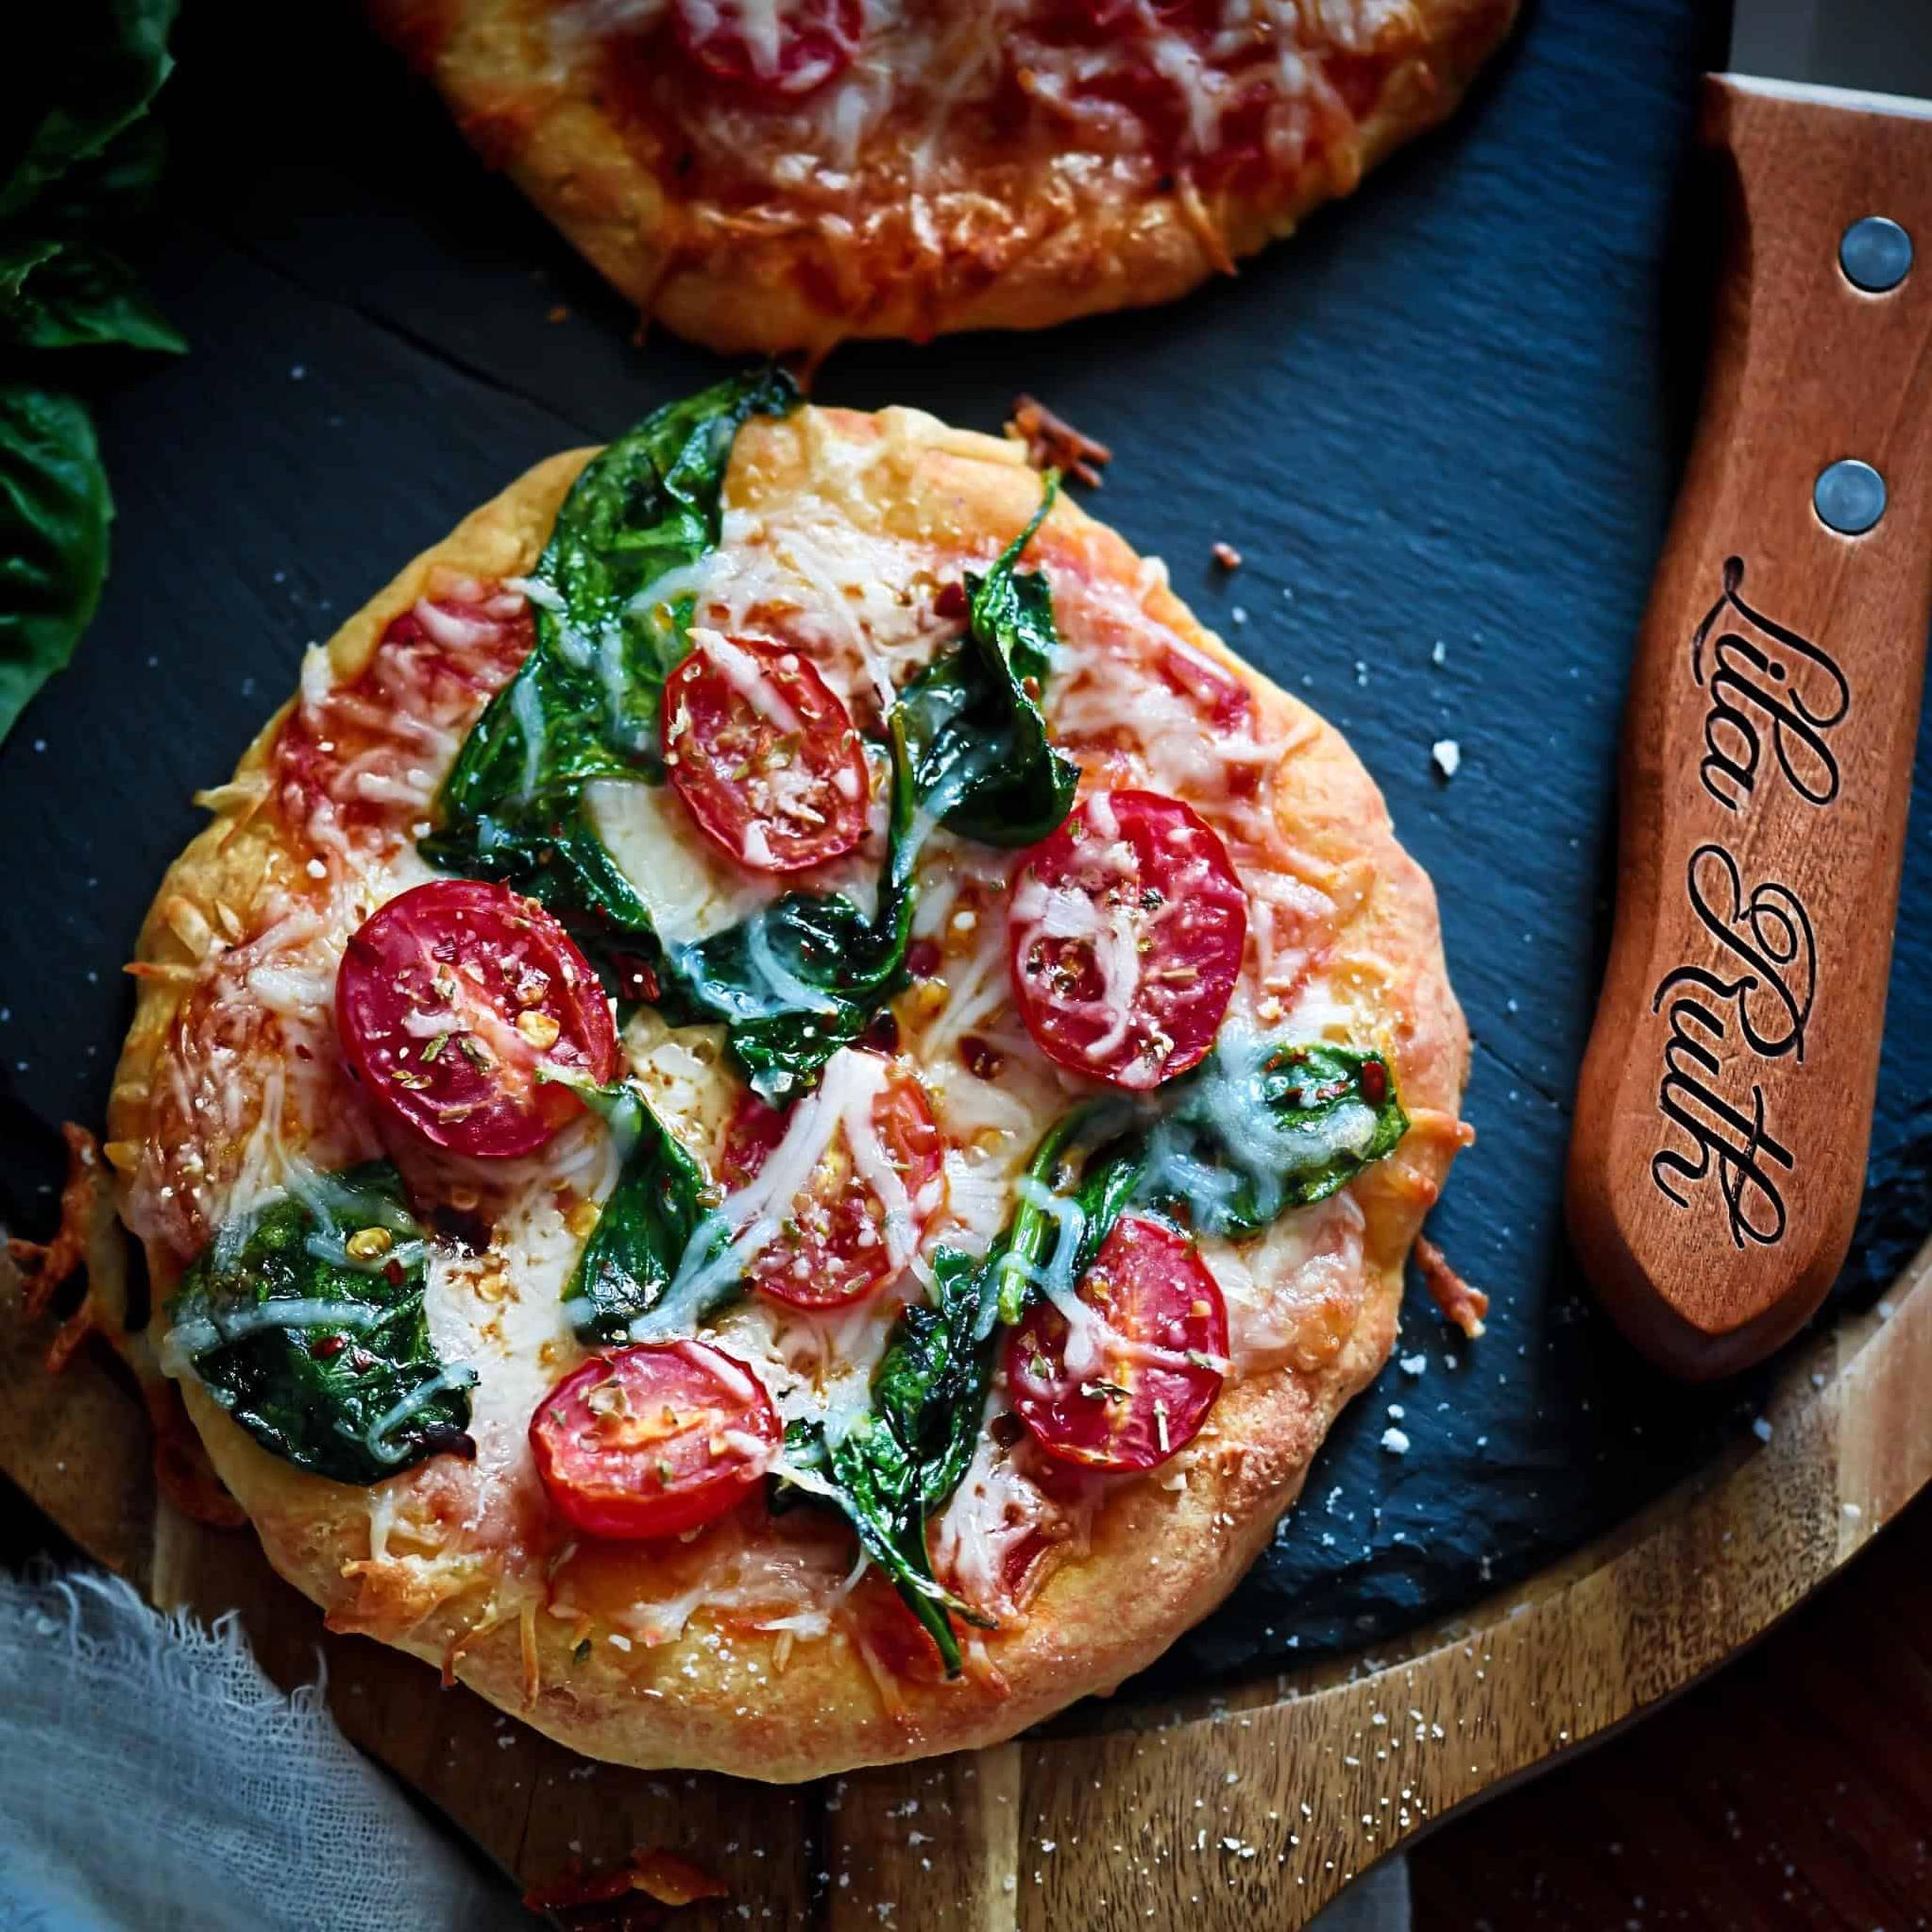  Savor each bite of this crispy, gluten-free pizza crust